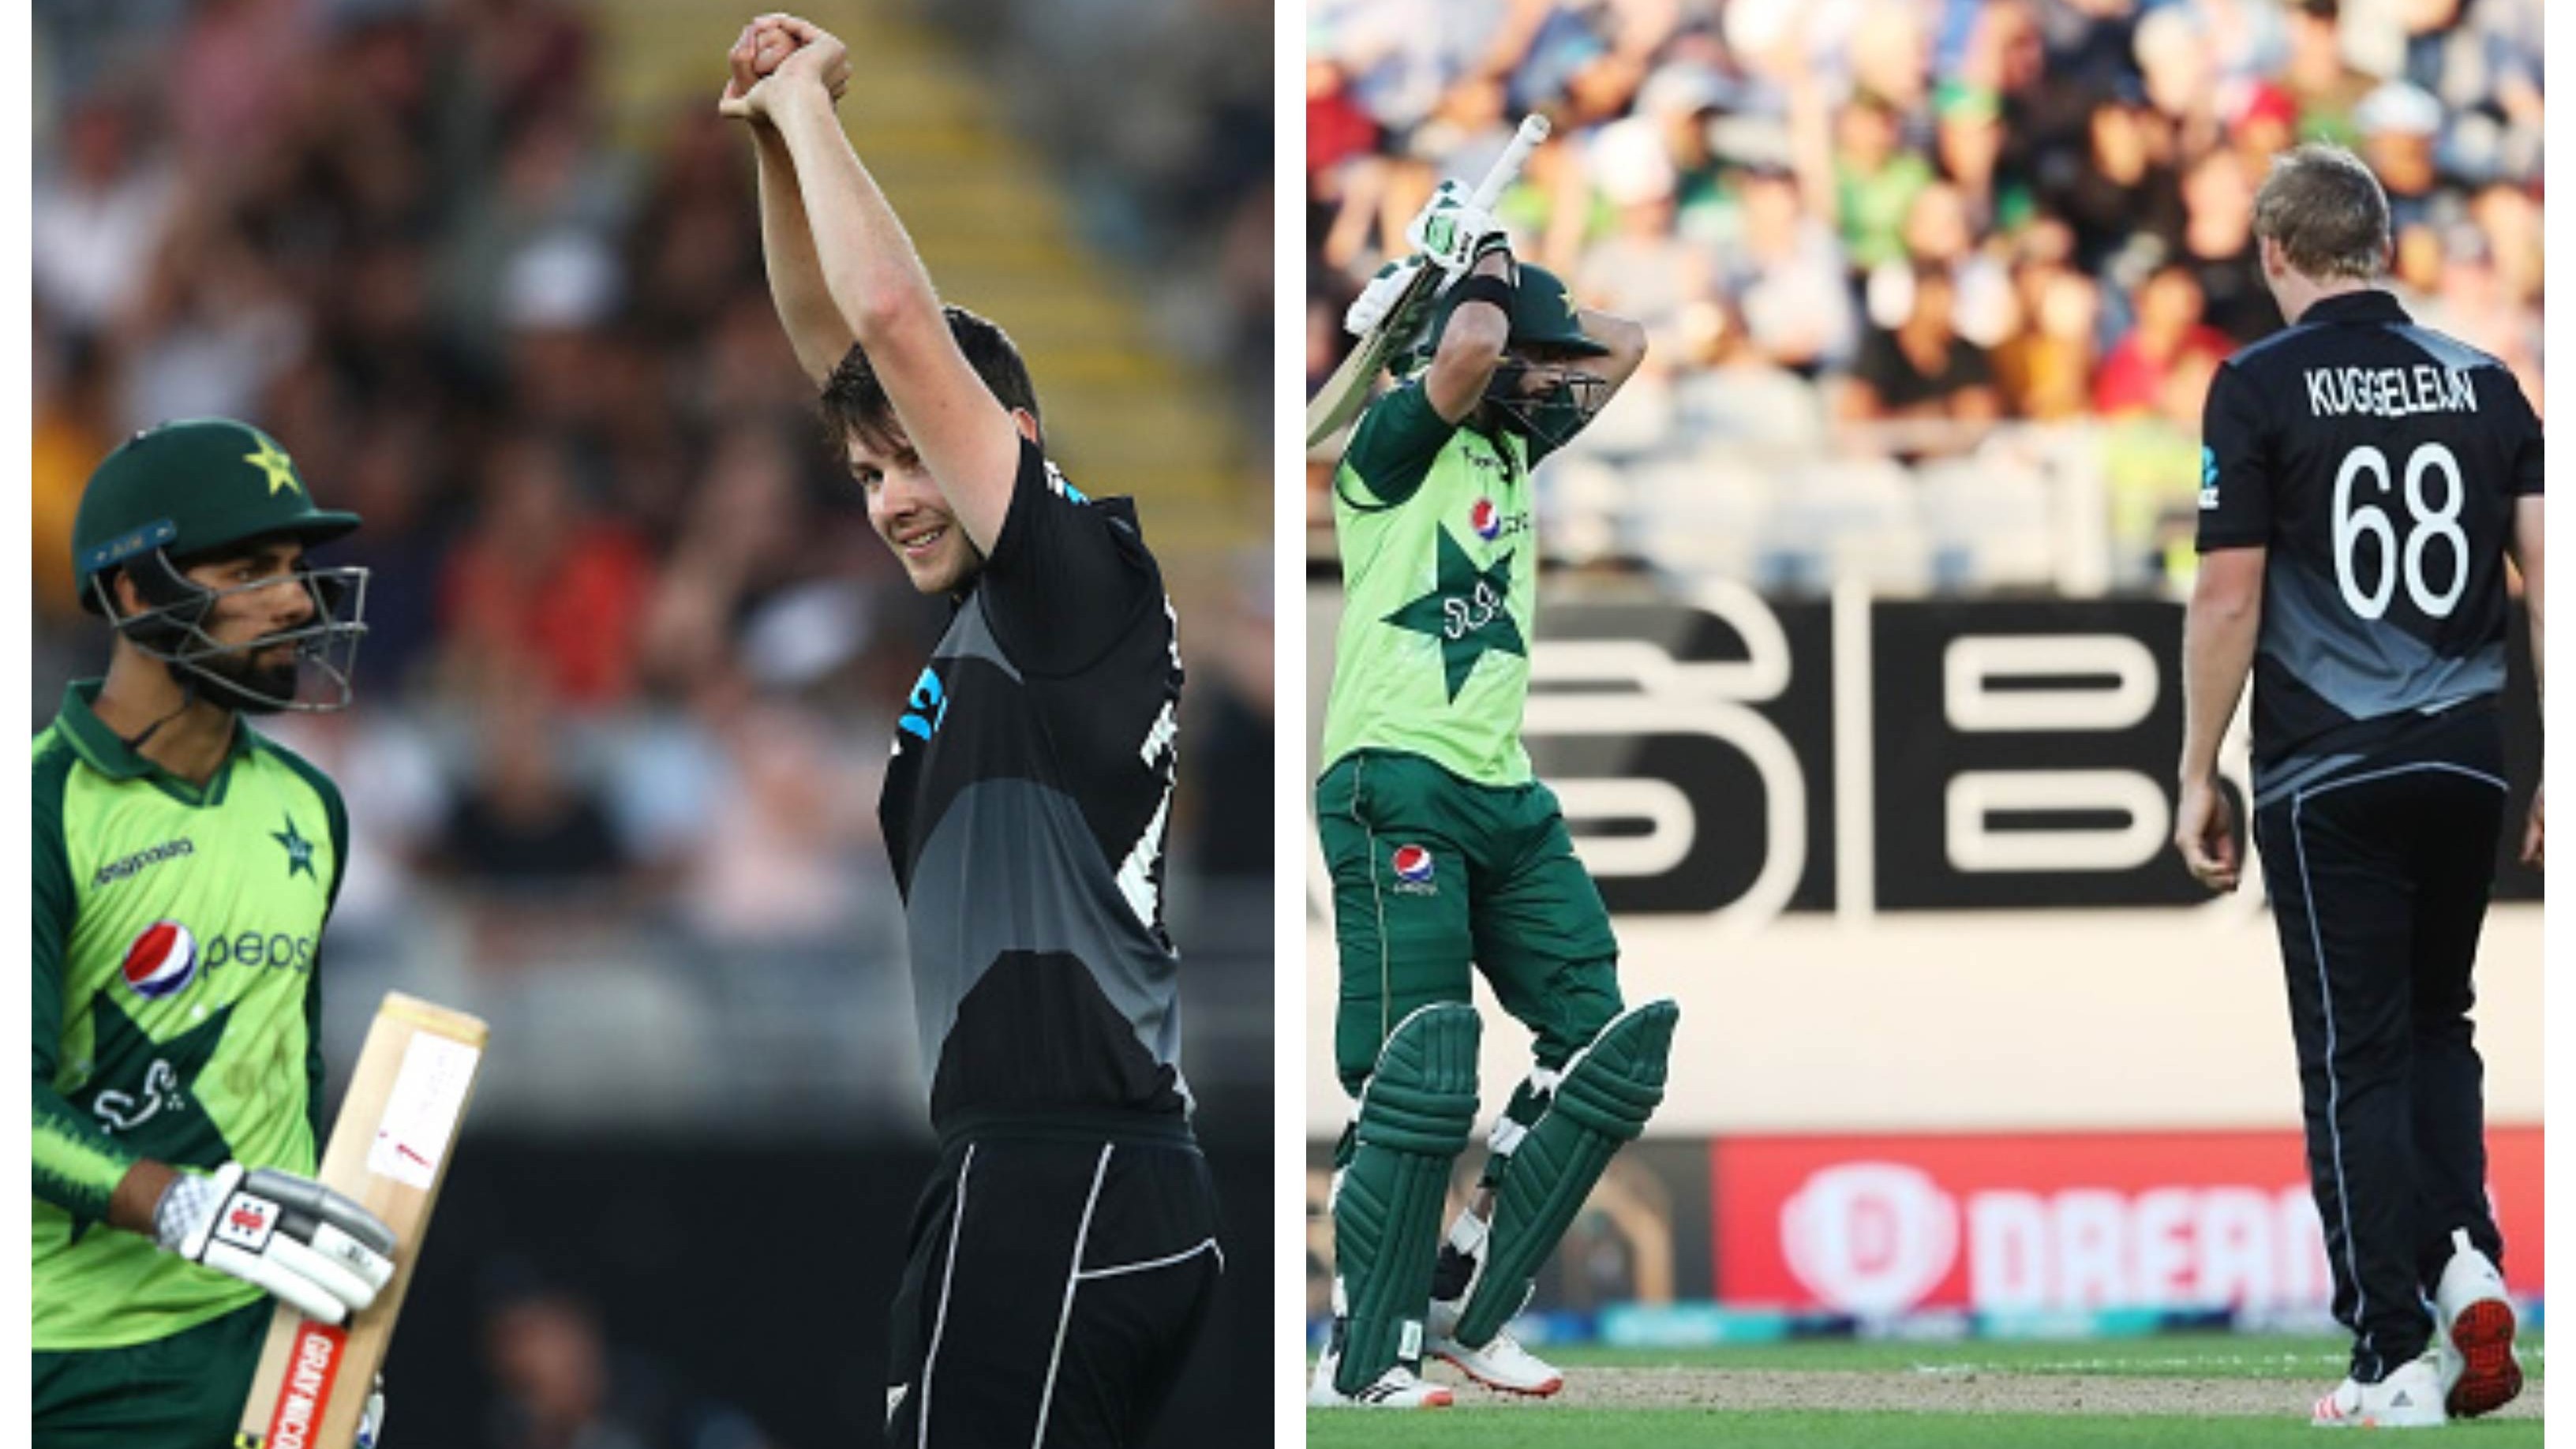 NZ v PAK 2020-21: Jacob Duffy, Scott Kuggeleijn star with the ball in New Zealand’s 5-wicket win in 1st T20I